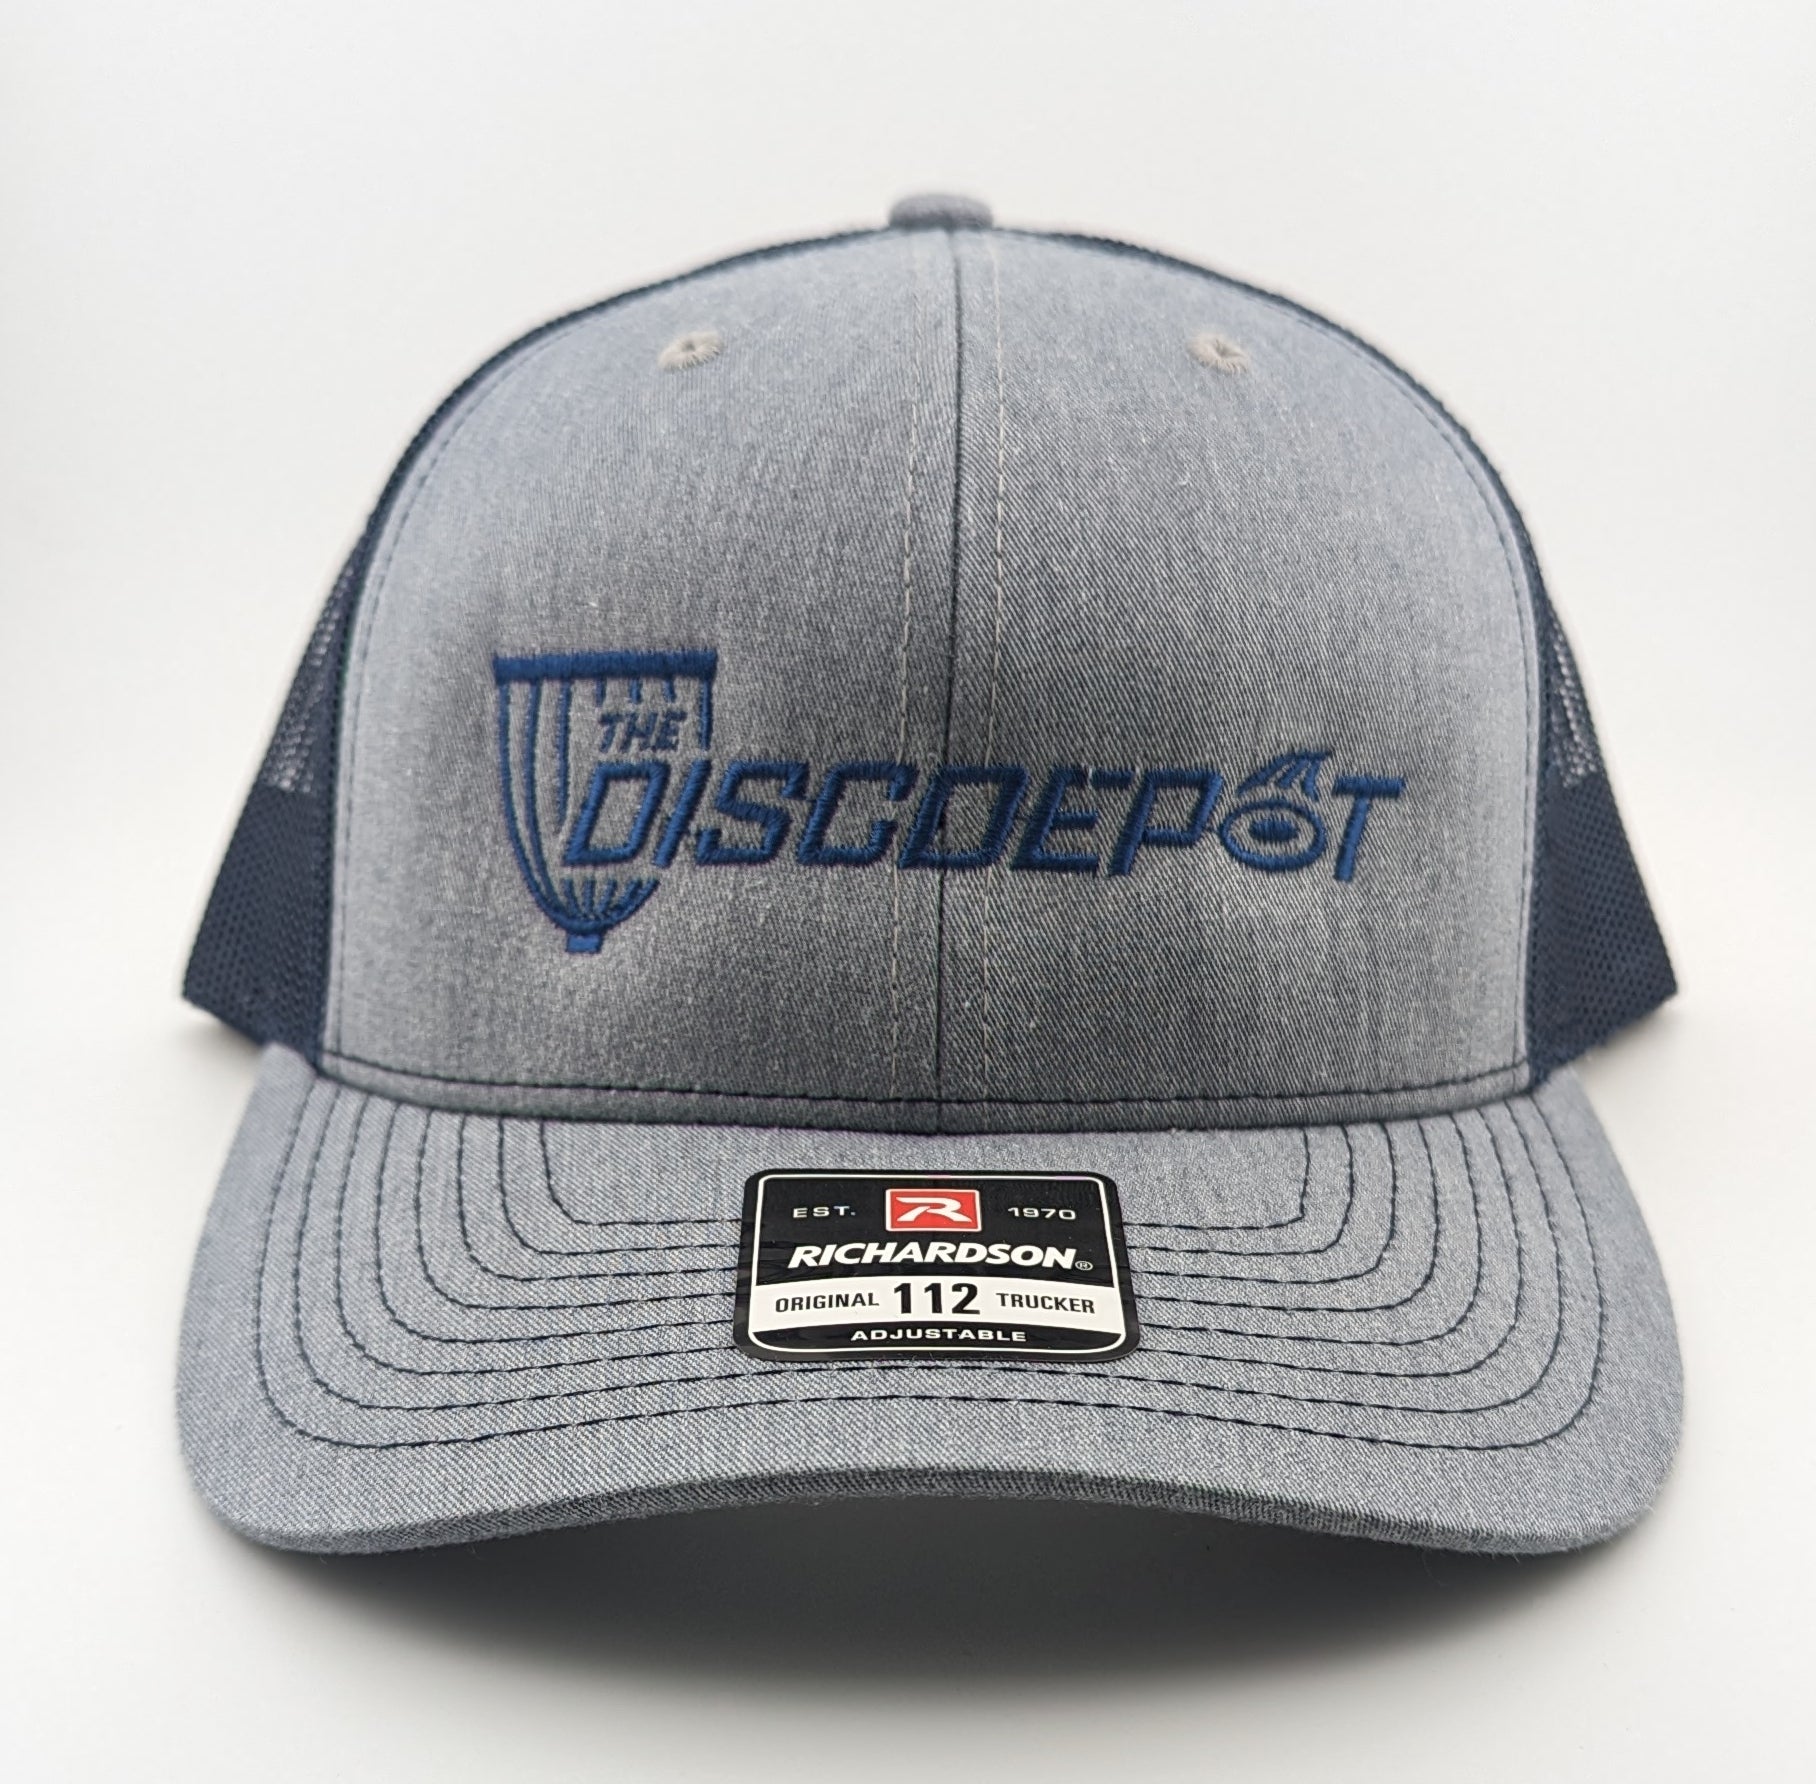 Buy navy-grey-navy-bar-logo The Disc Depot Richardson 112 Trucker Hat